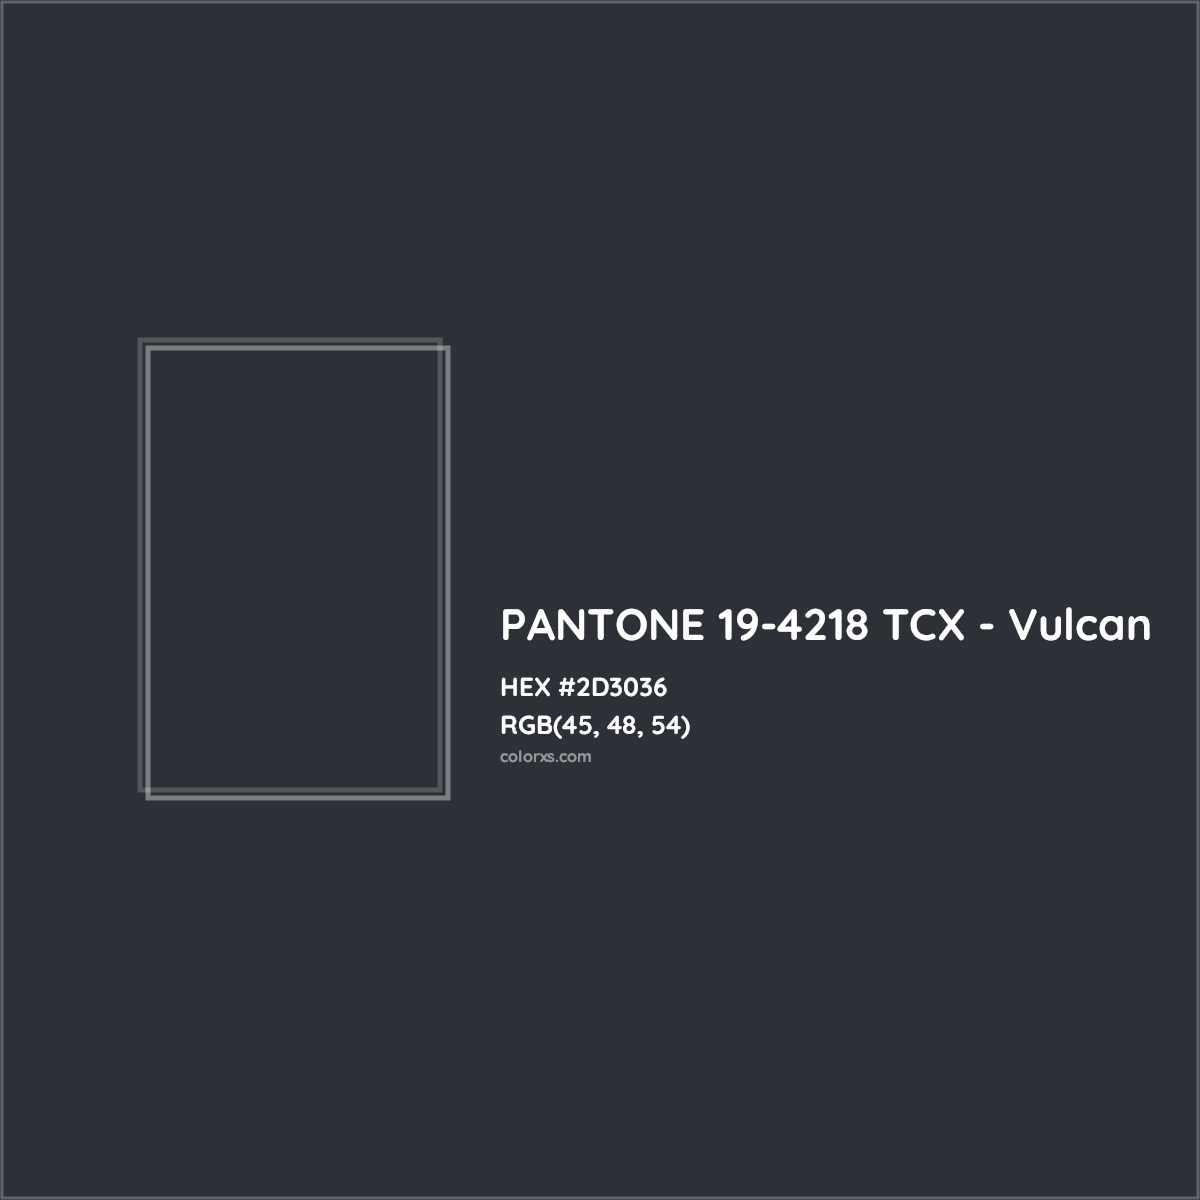 HEX #2D3036 PANTONE 19-4218 TCX - Vulcan CMS Pantone TCX - Color Code